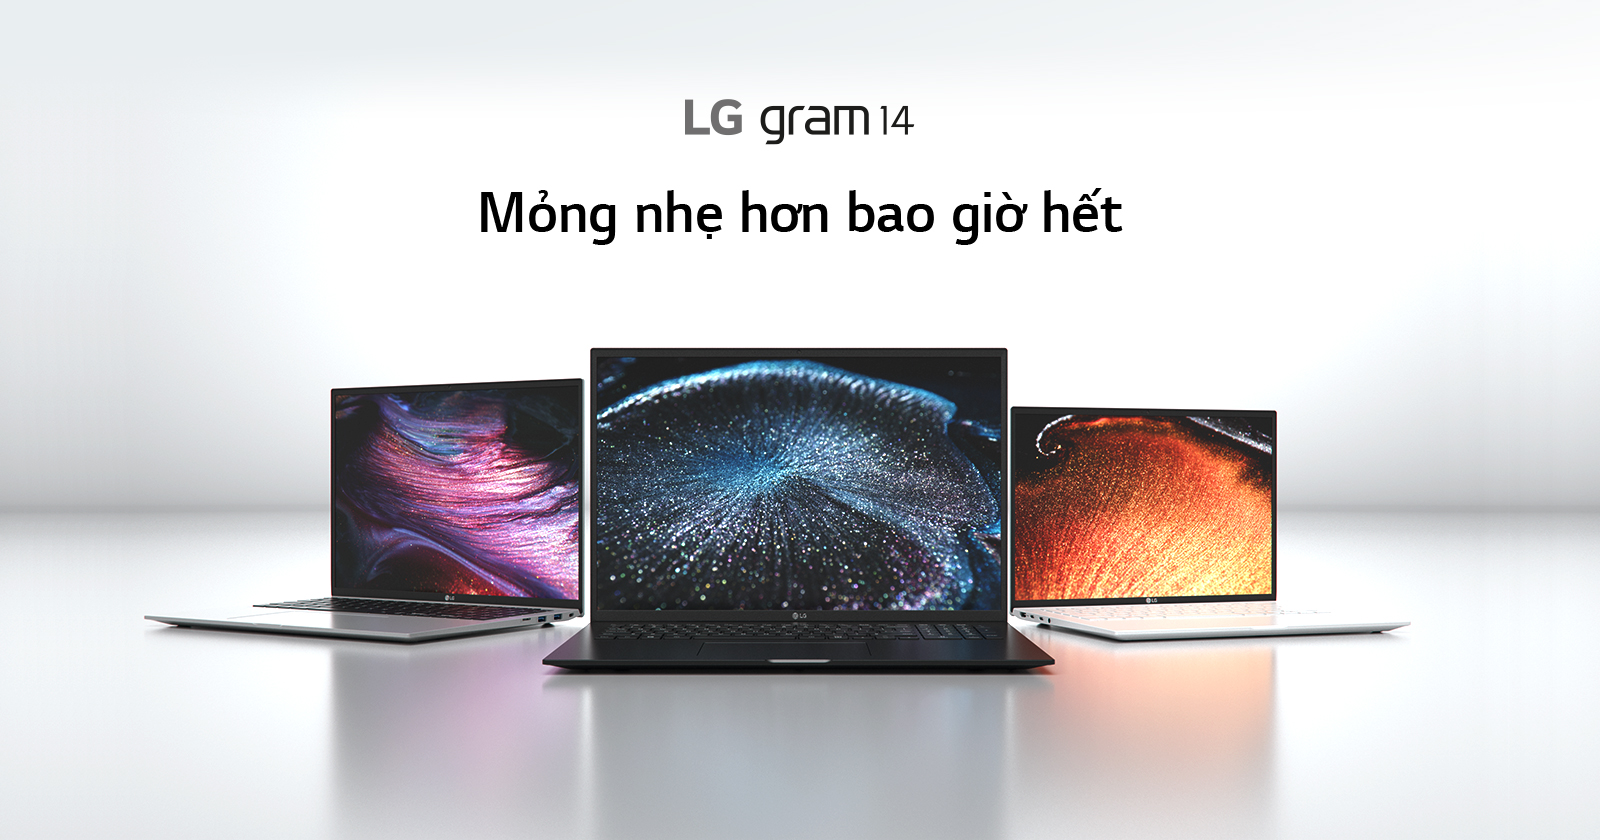 Laptop LG Gram 2021